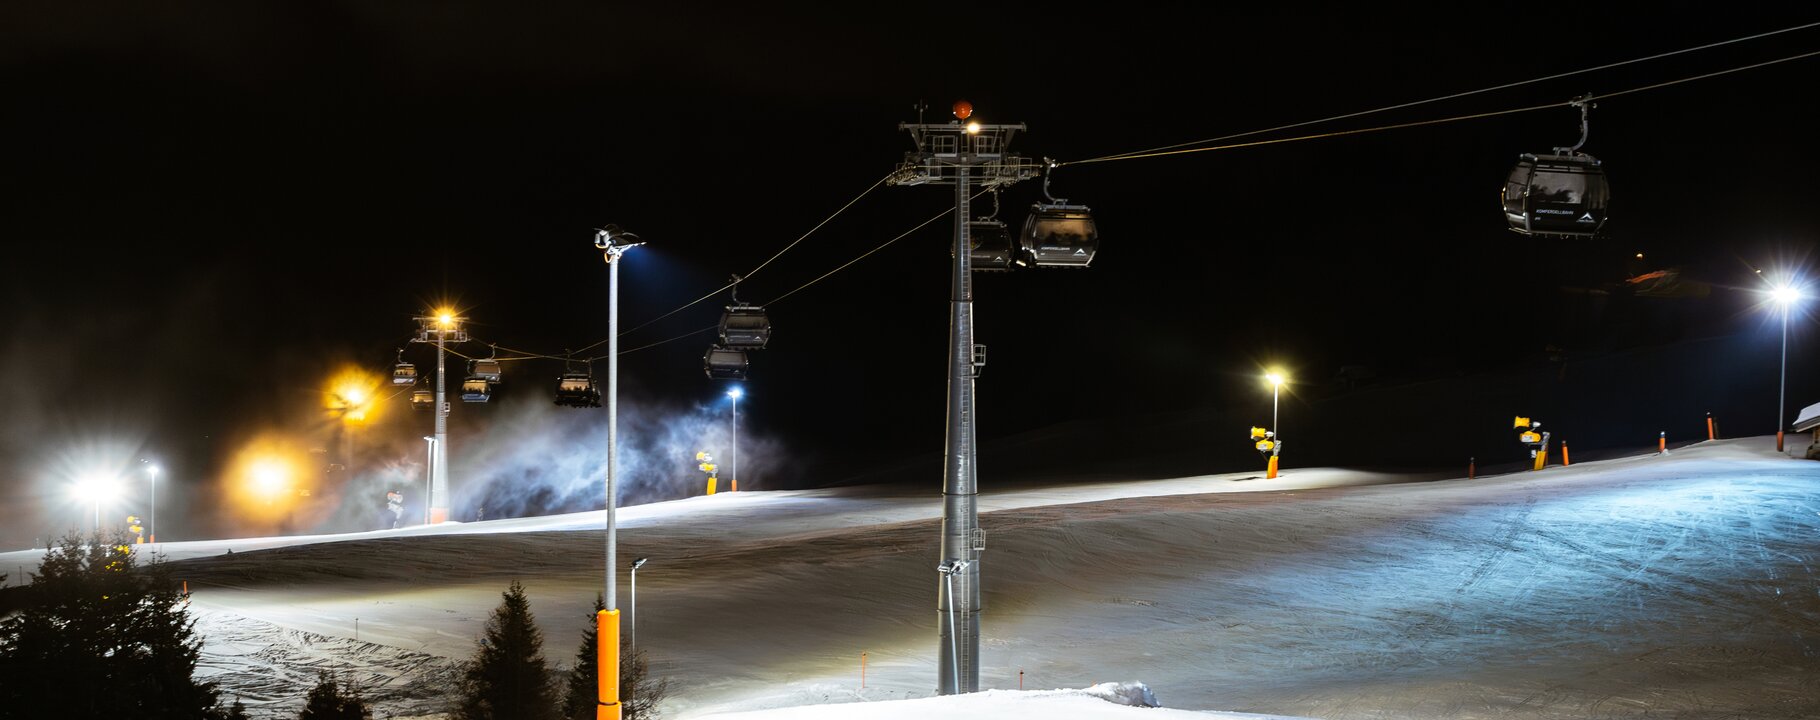 Nighttime skiing at the Komperdell in Serfaus in Tyrol | © Serfaus-Fiss-Ladis-Marketing GmbH | Markus Lindl